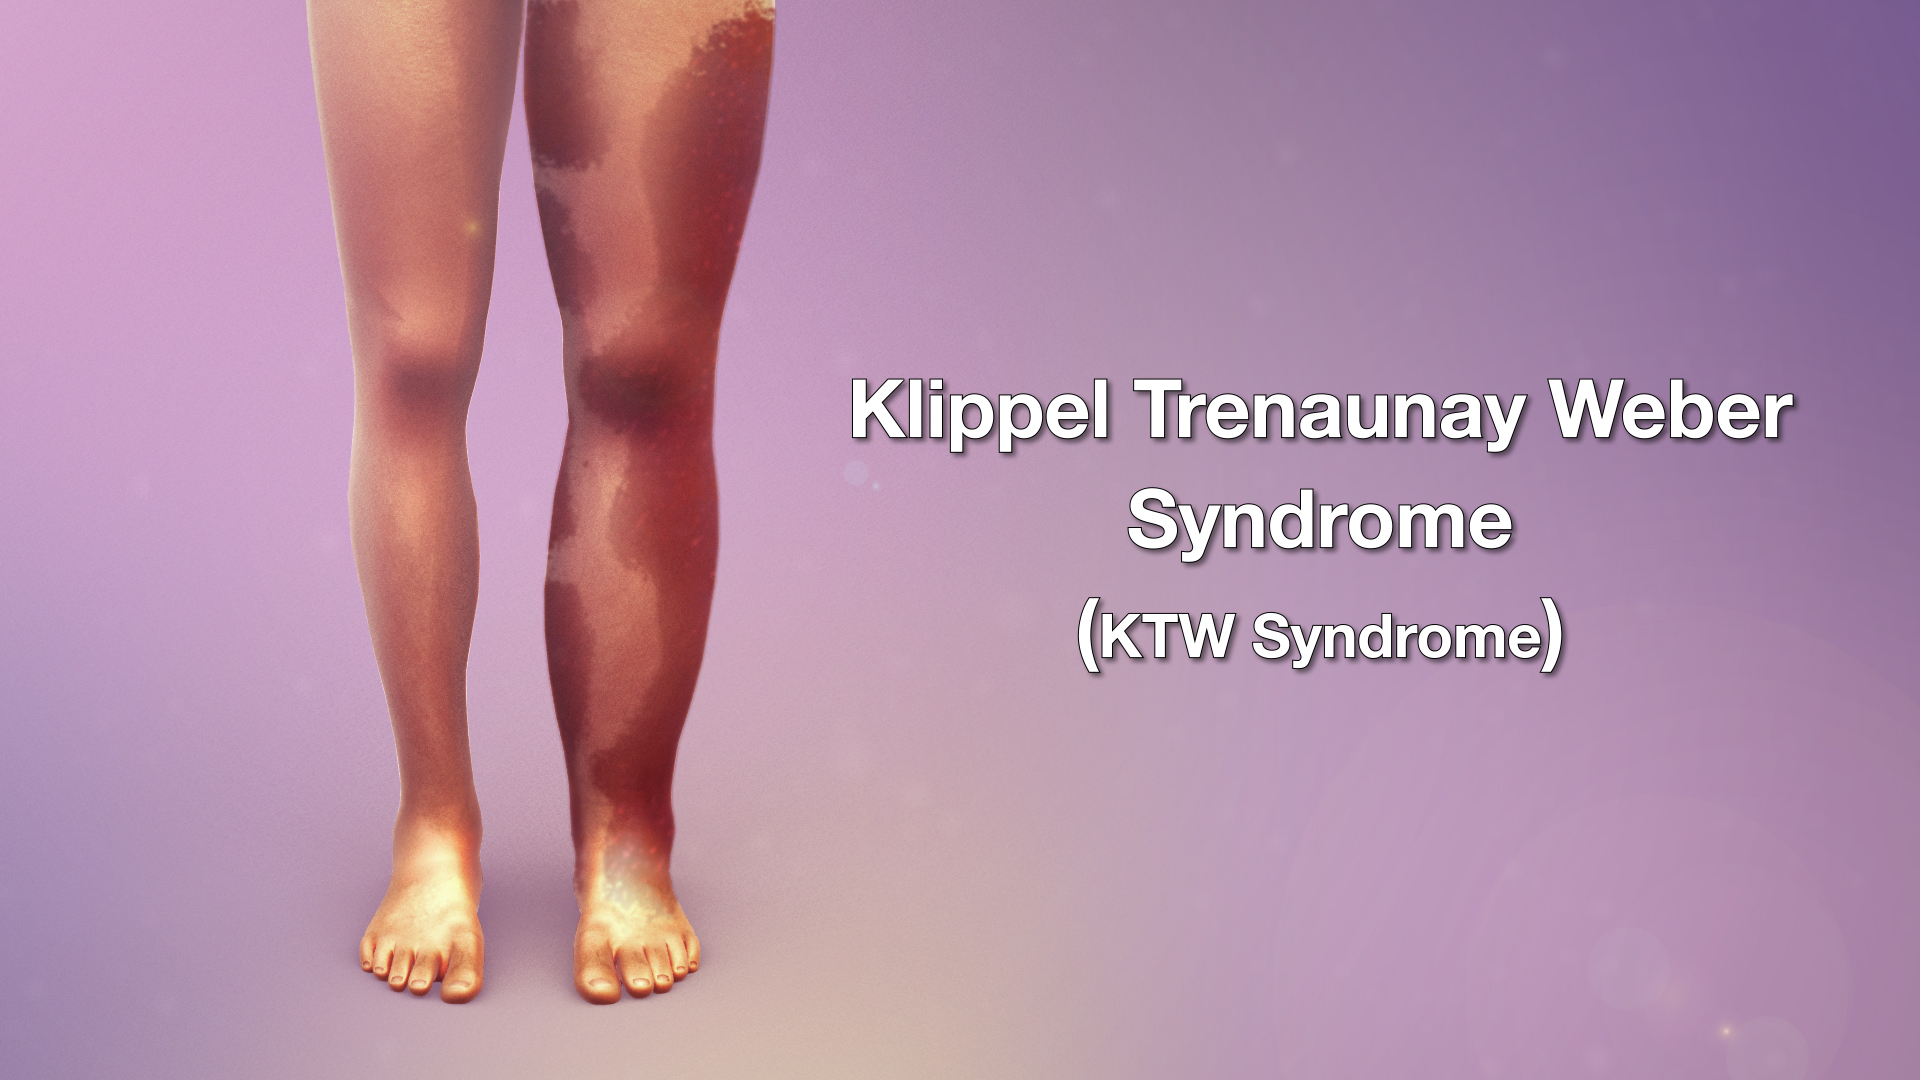 Medical Animation Illustrating Klippel-Trenaunay-Weber (KTW) syndrome